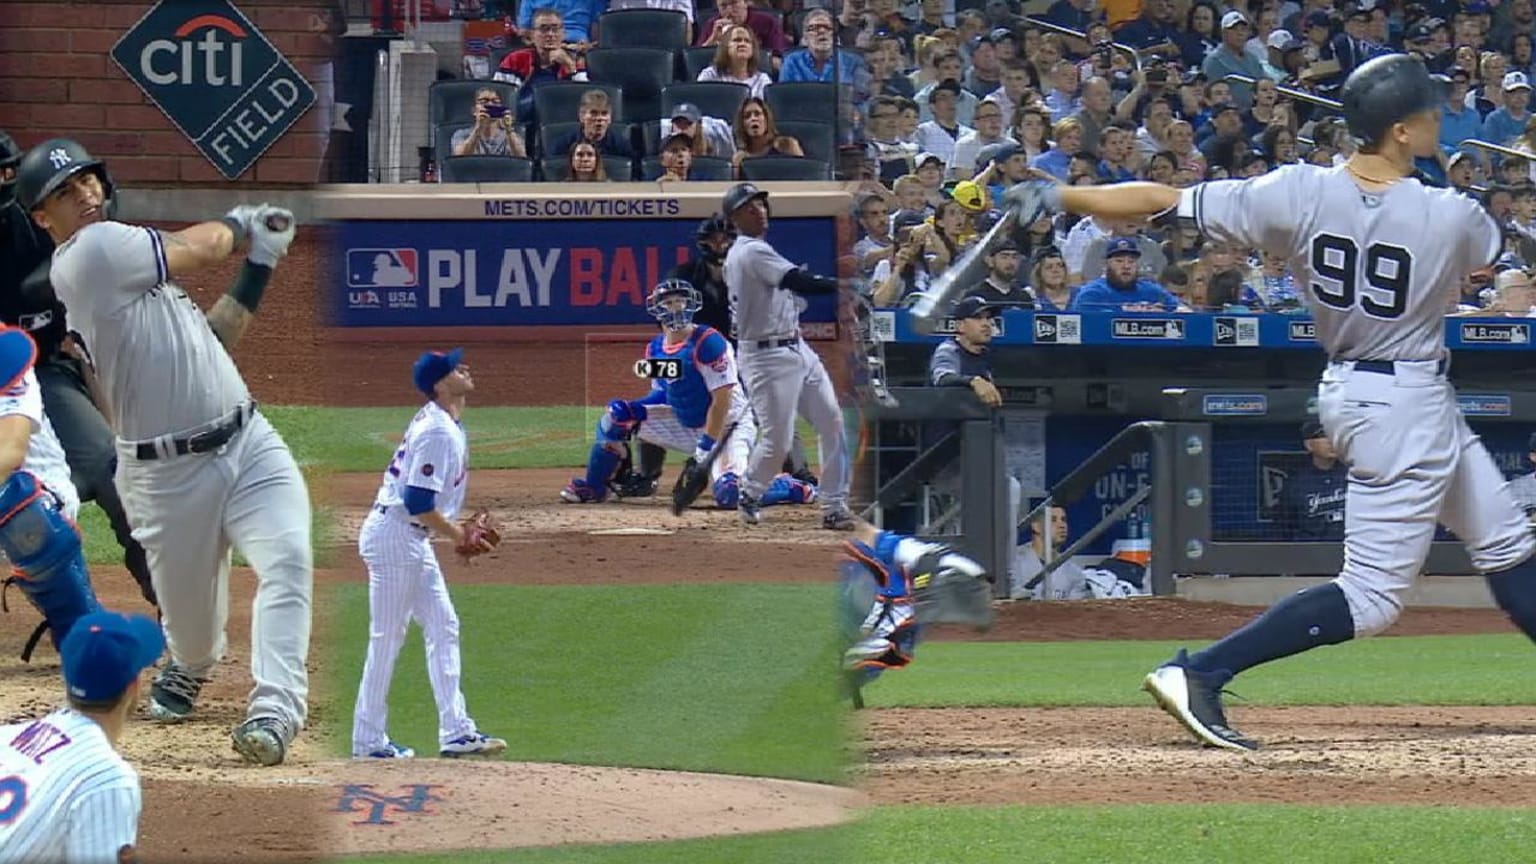 Yankees' Miguel Andujar practices fielding baseballs off the Green Monster